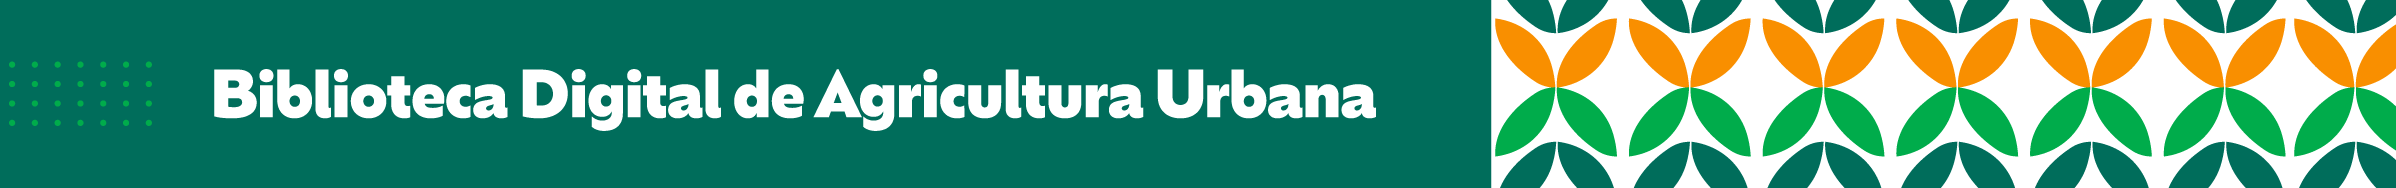 Titulo: Biblioteca Digital Agricultura Urbana